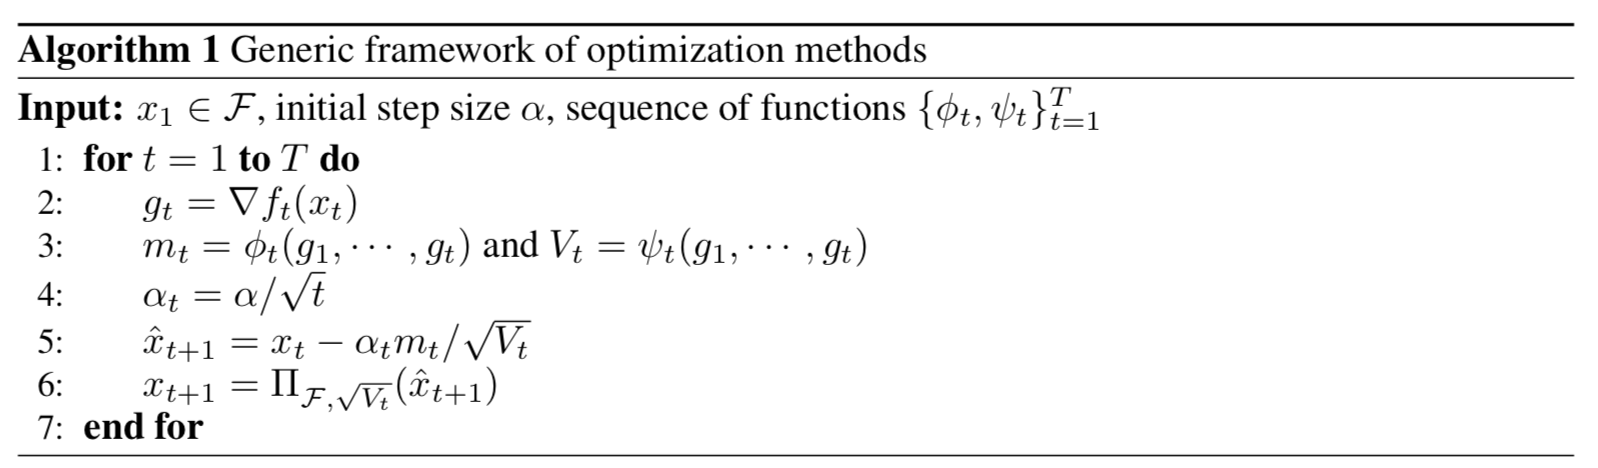 generic-optimize-algorithm